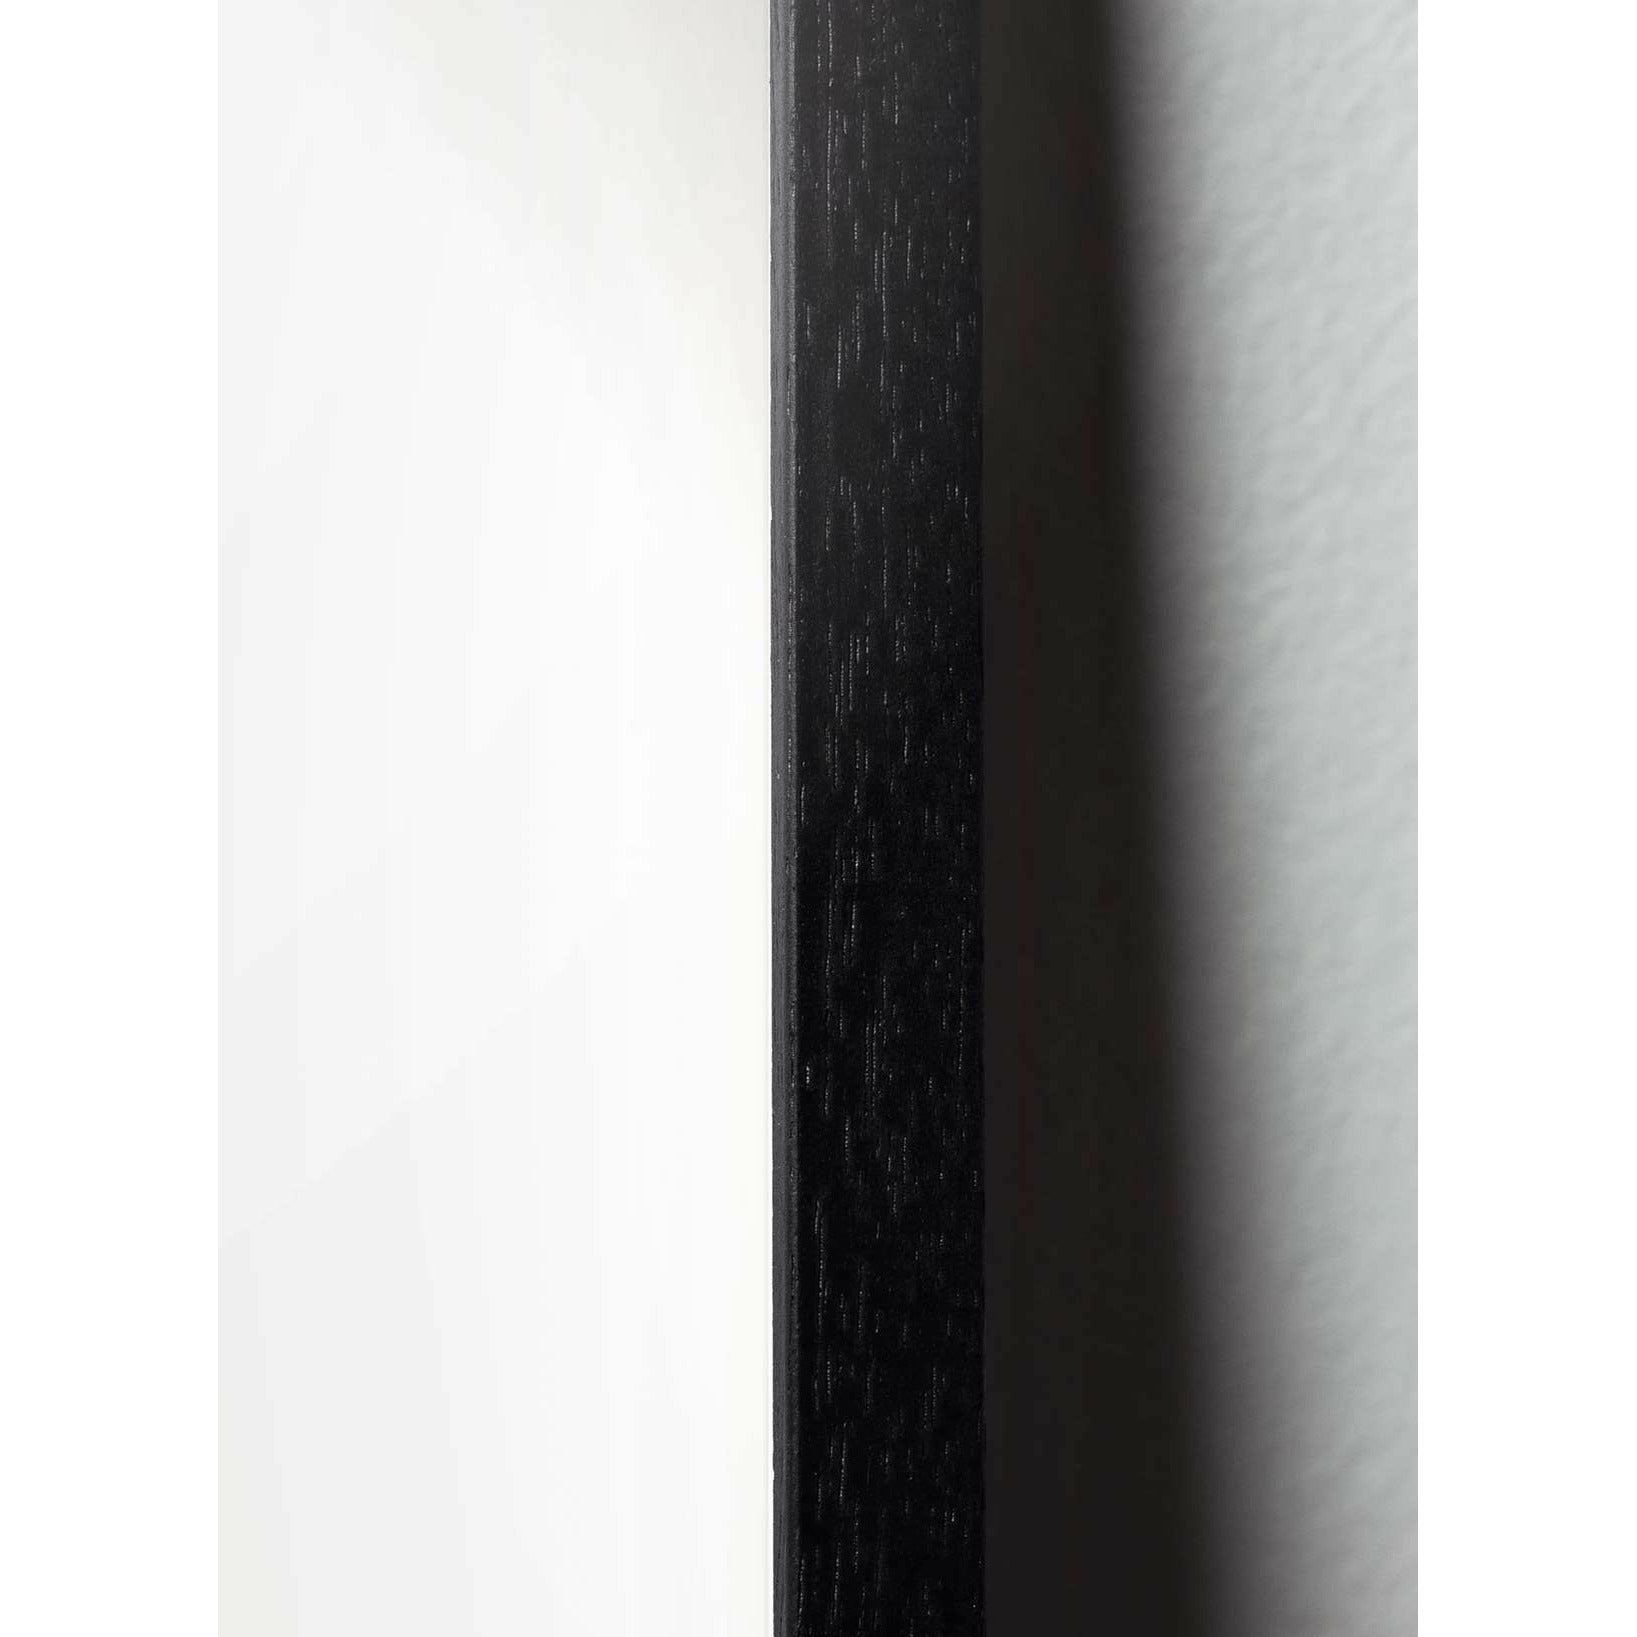 Brainchild Klassieke teddybeer klassieke poster, frame in zwart gelakt hout a5, zandkleurige achtergrond